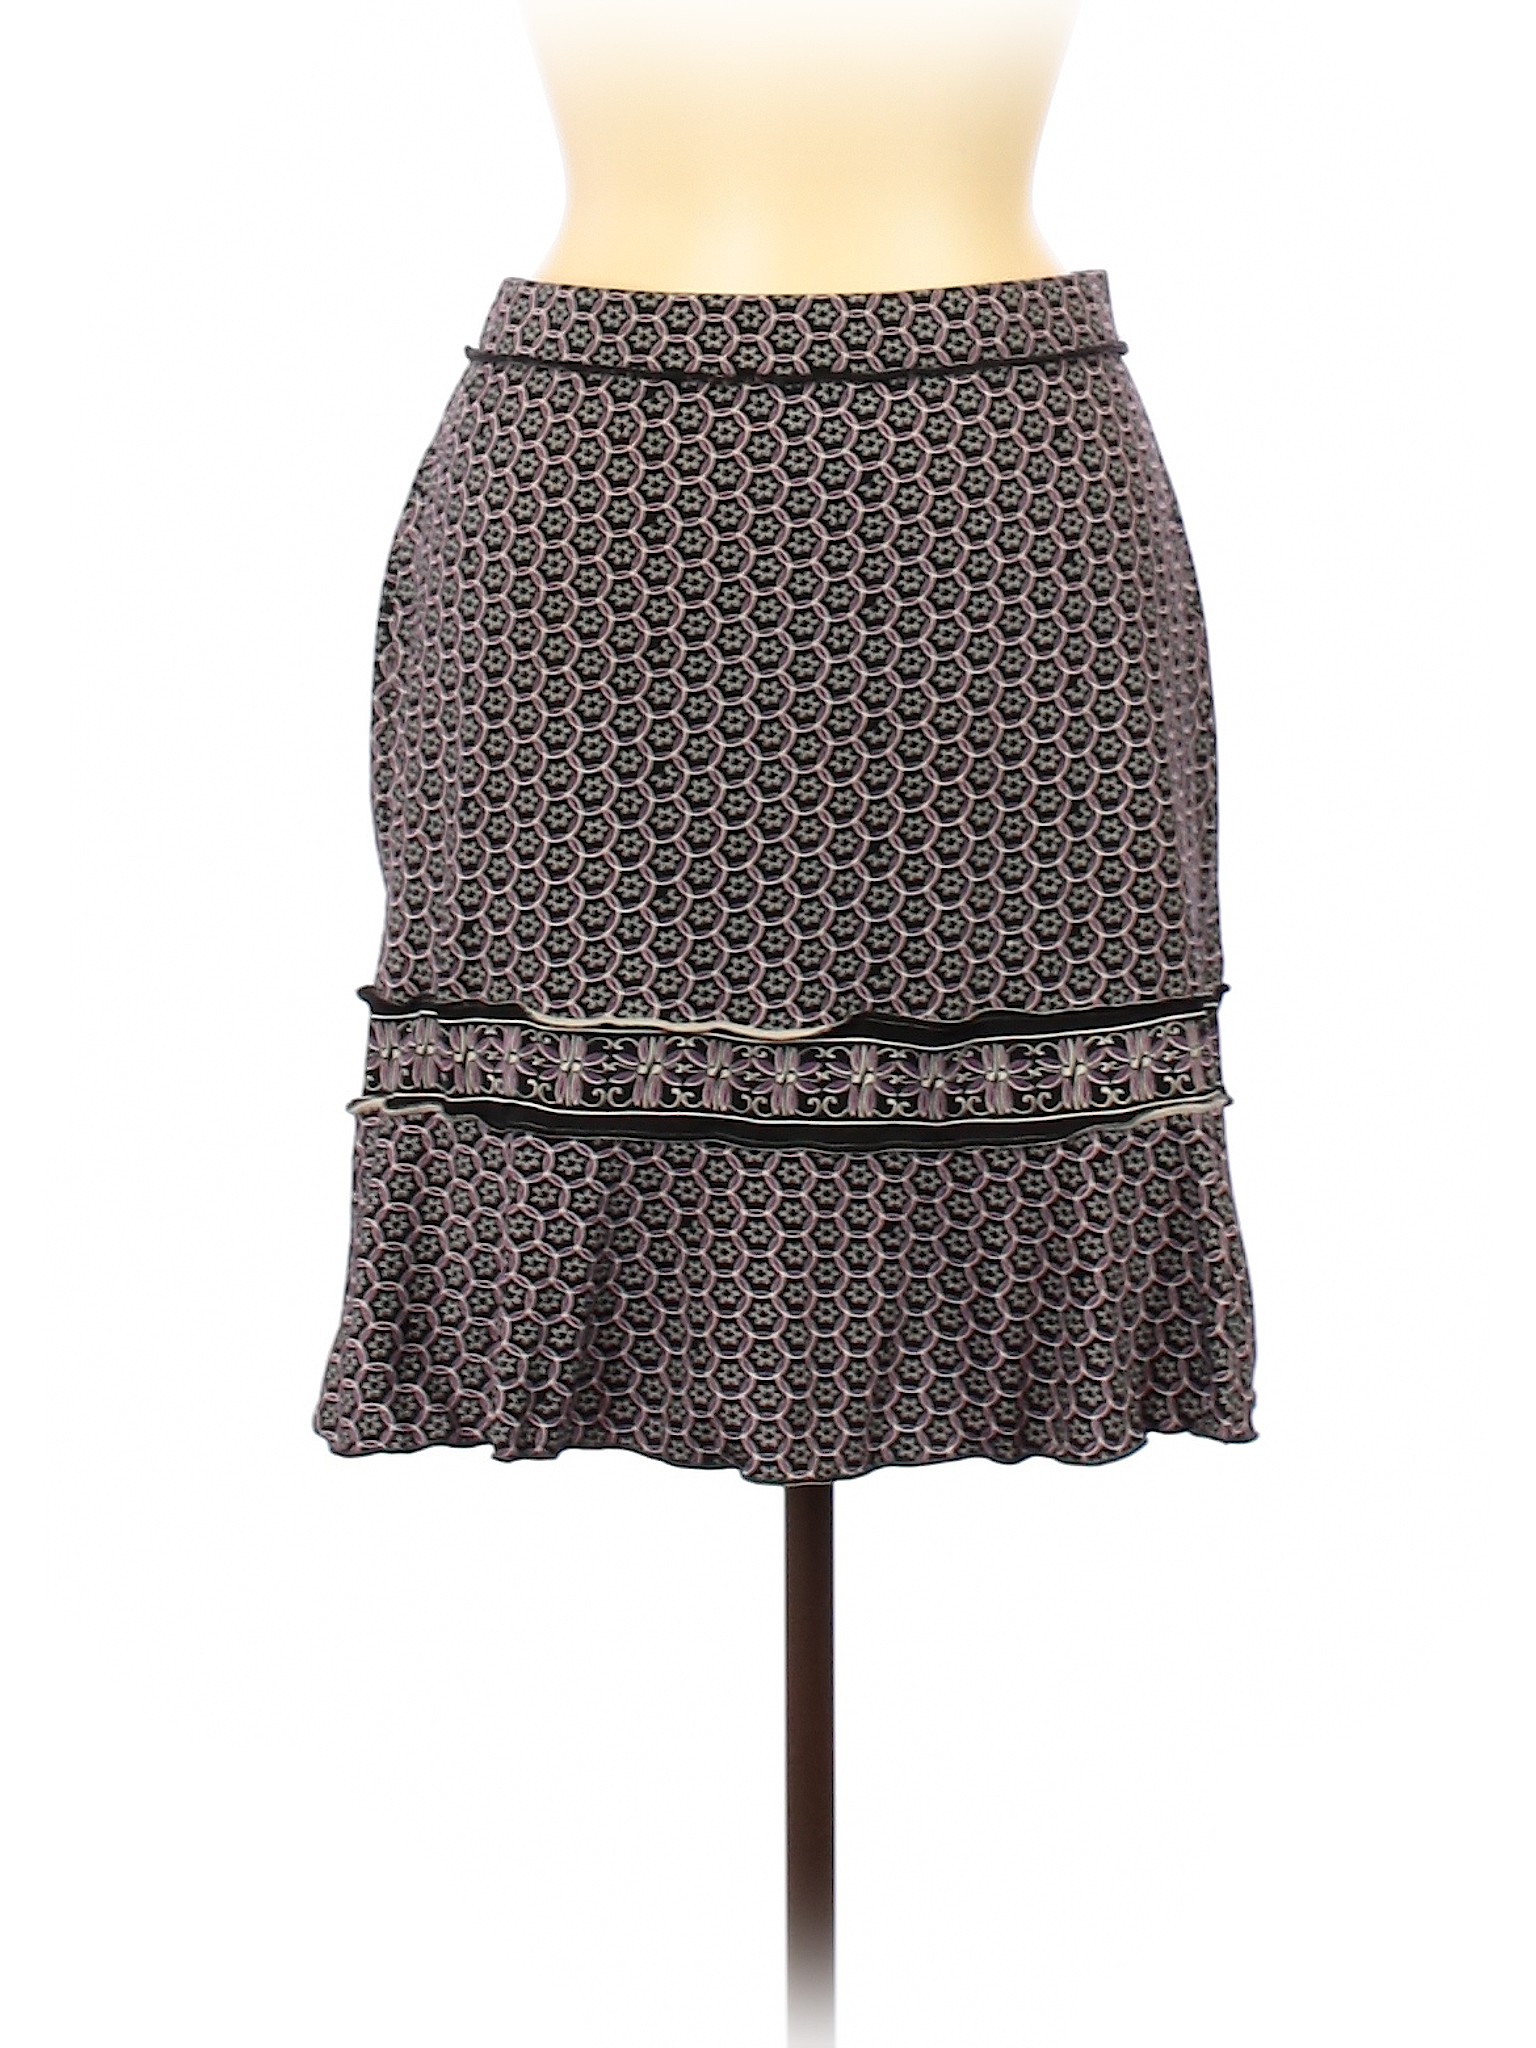 Max Studio Women Black Casual Skirt S | eBay